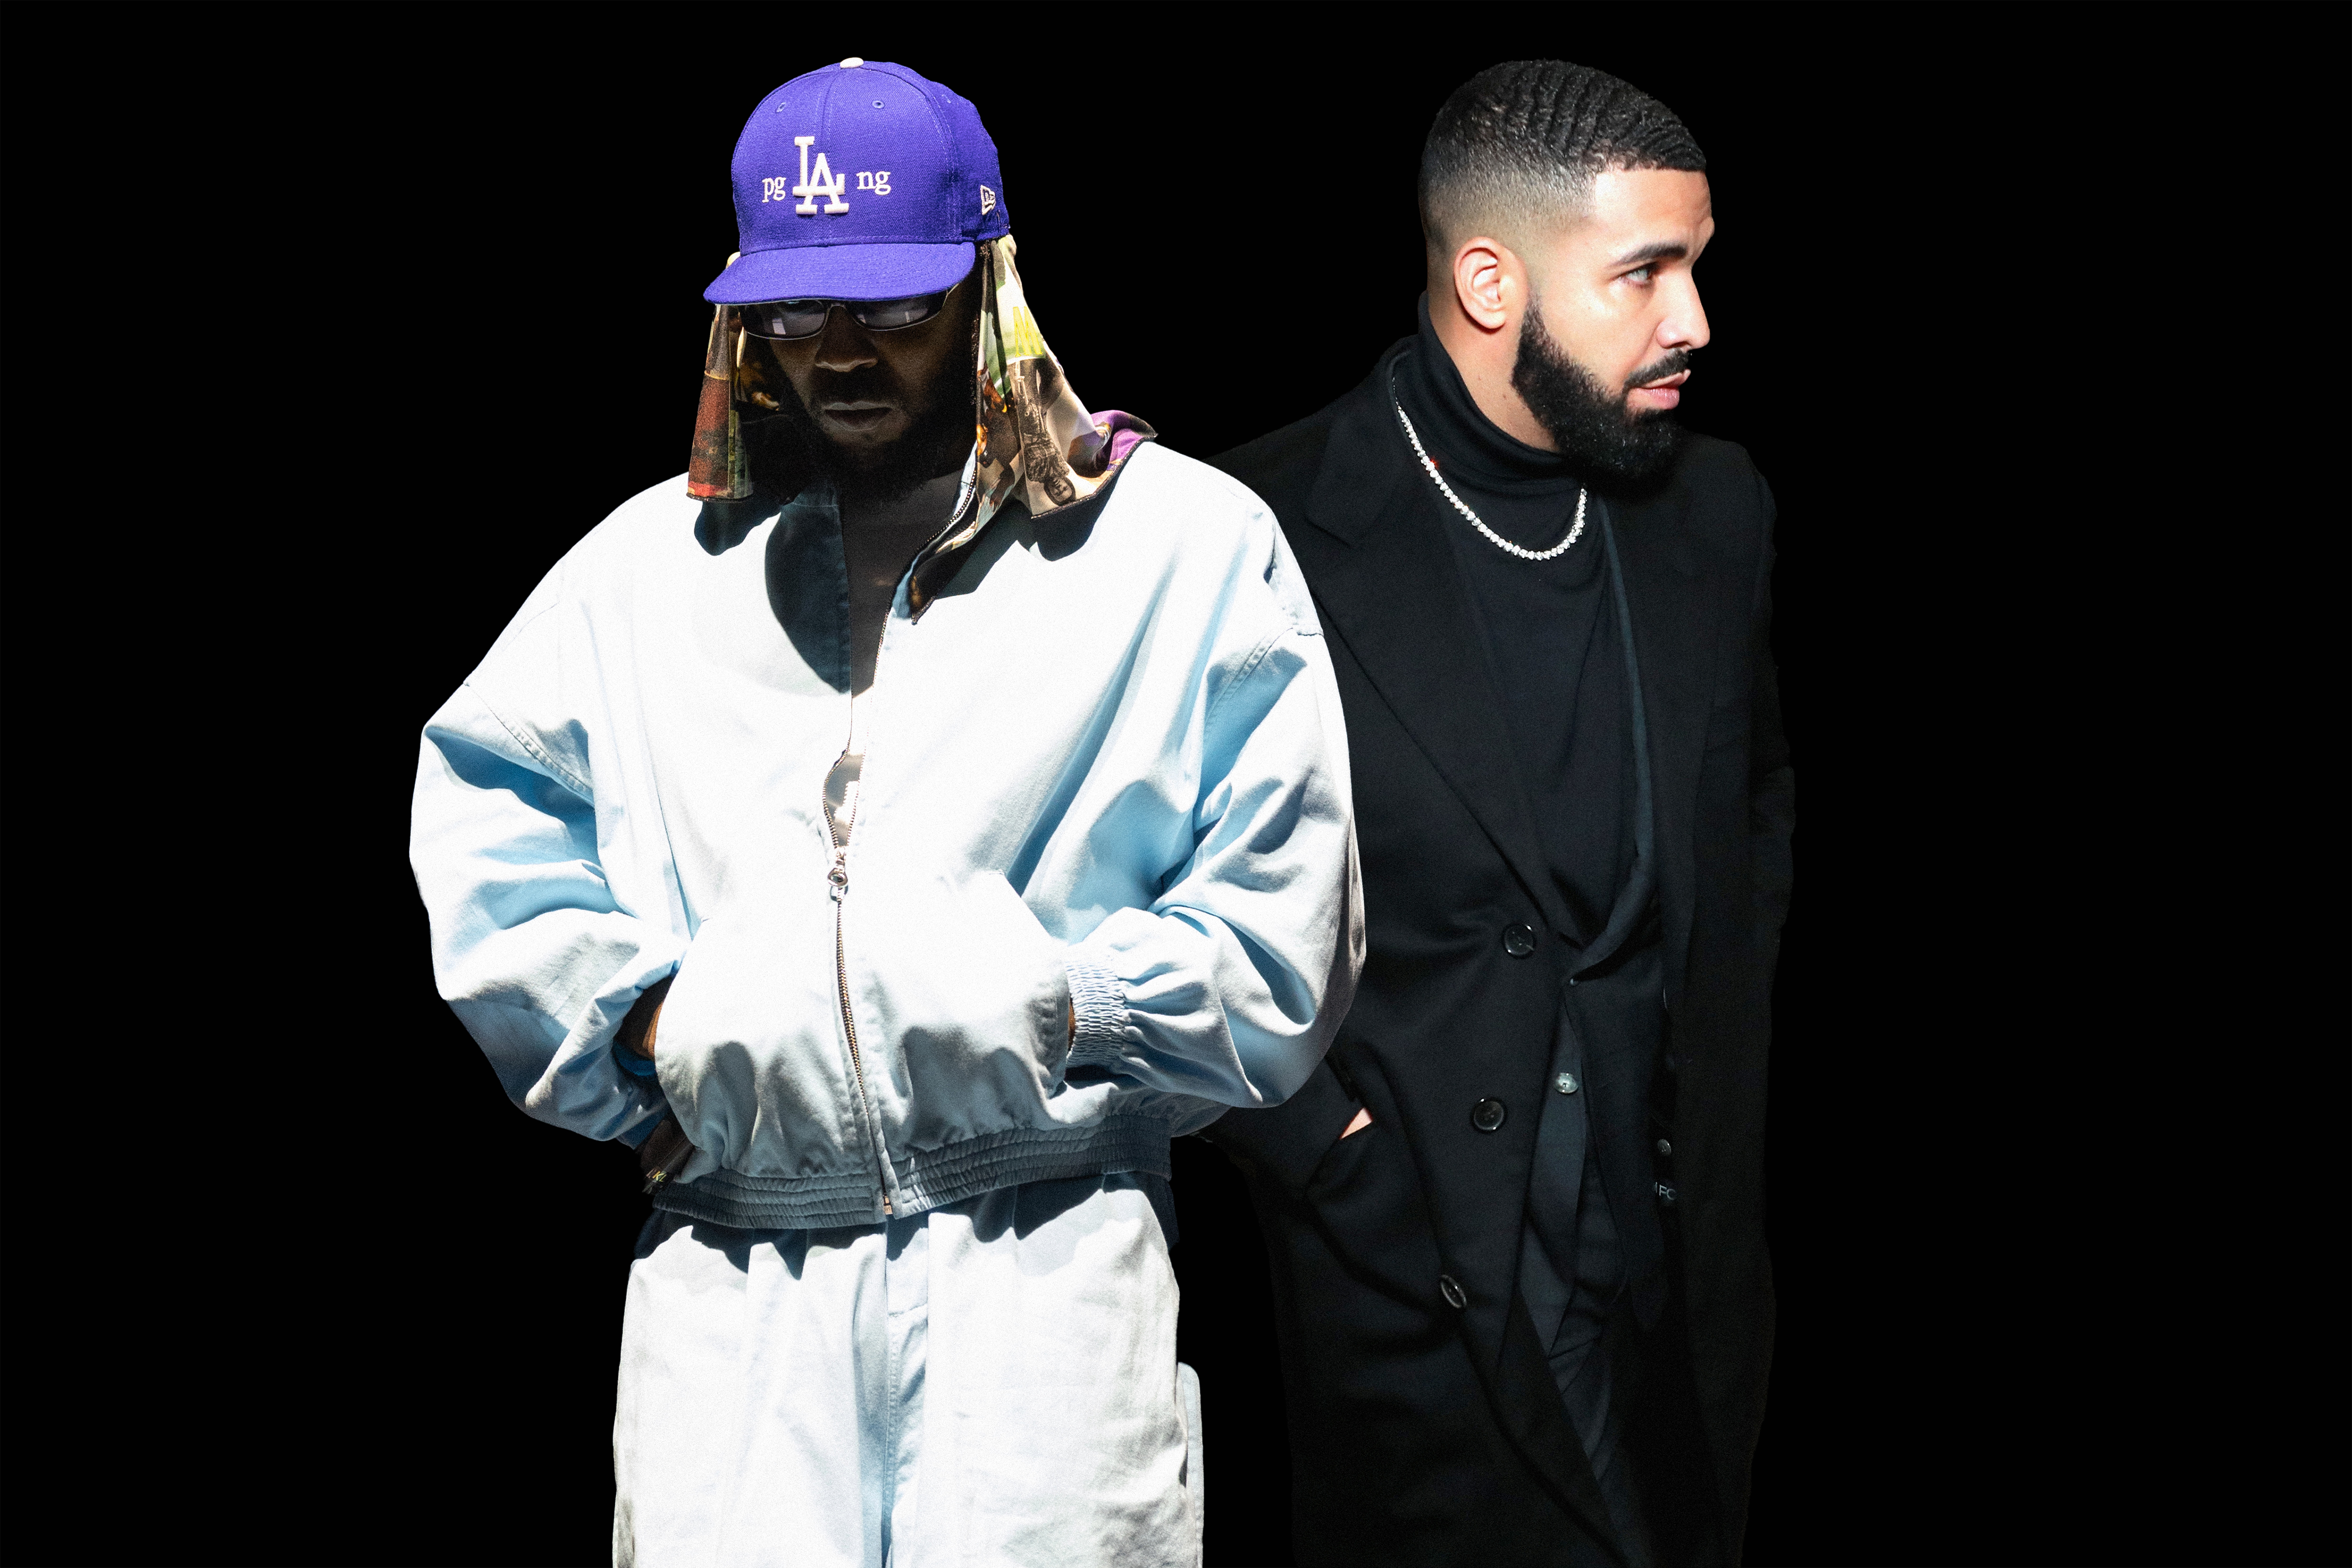 Who is the Best-Dressed Rapper? Kendrick Lamar or Drake? #KendrickLamar